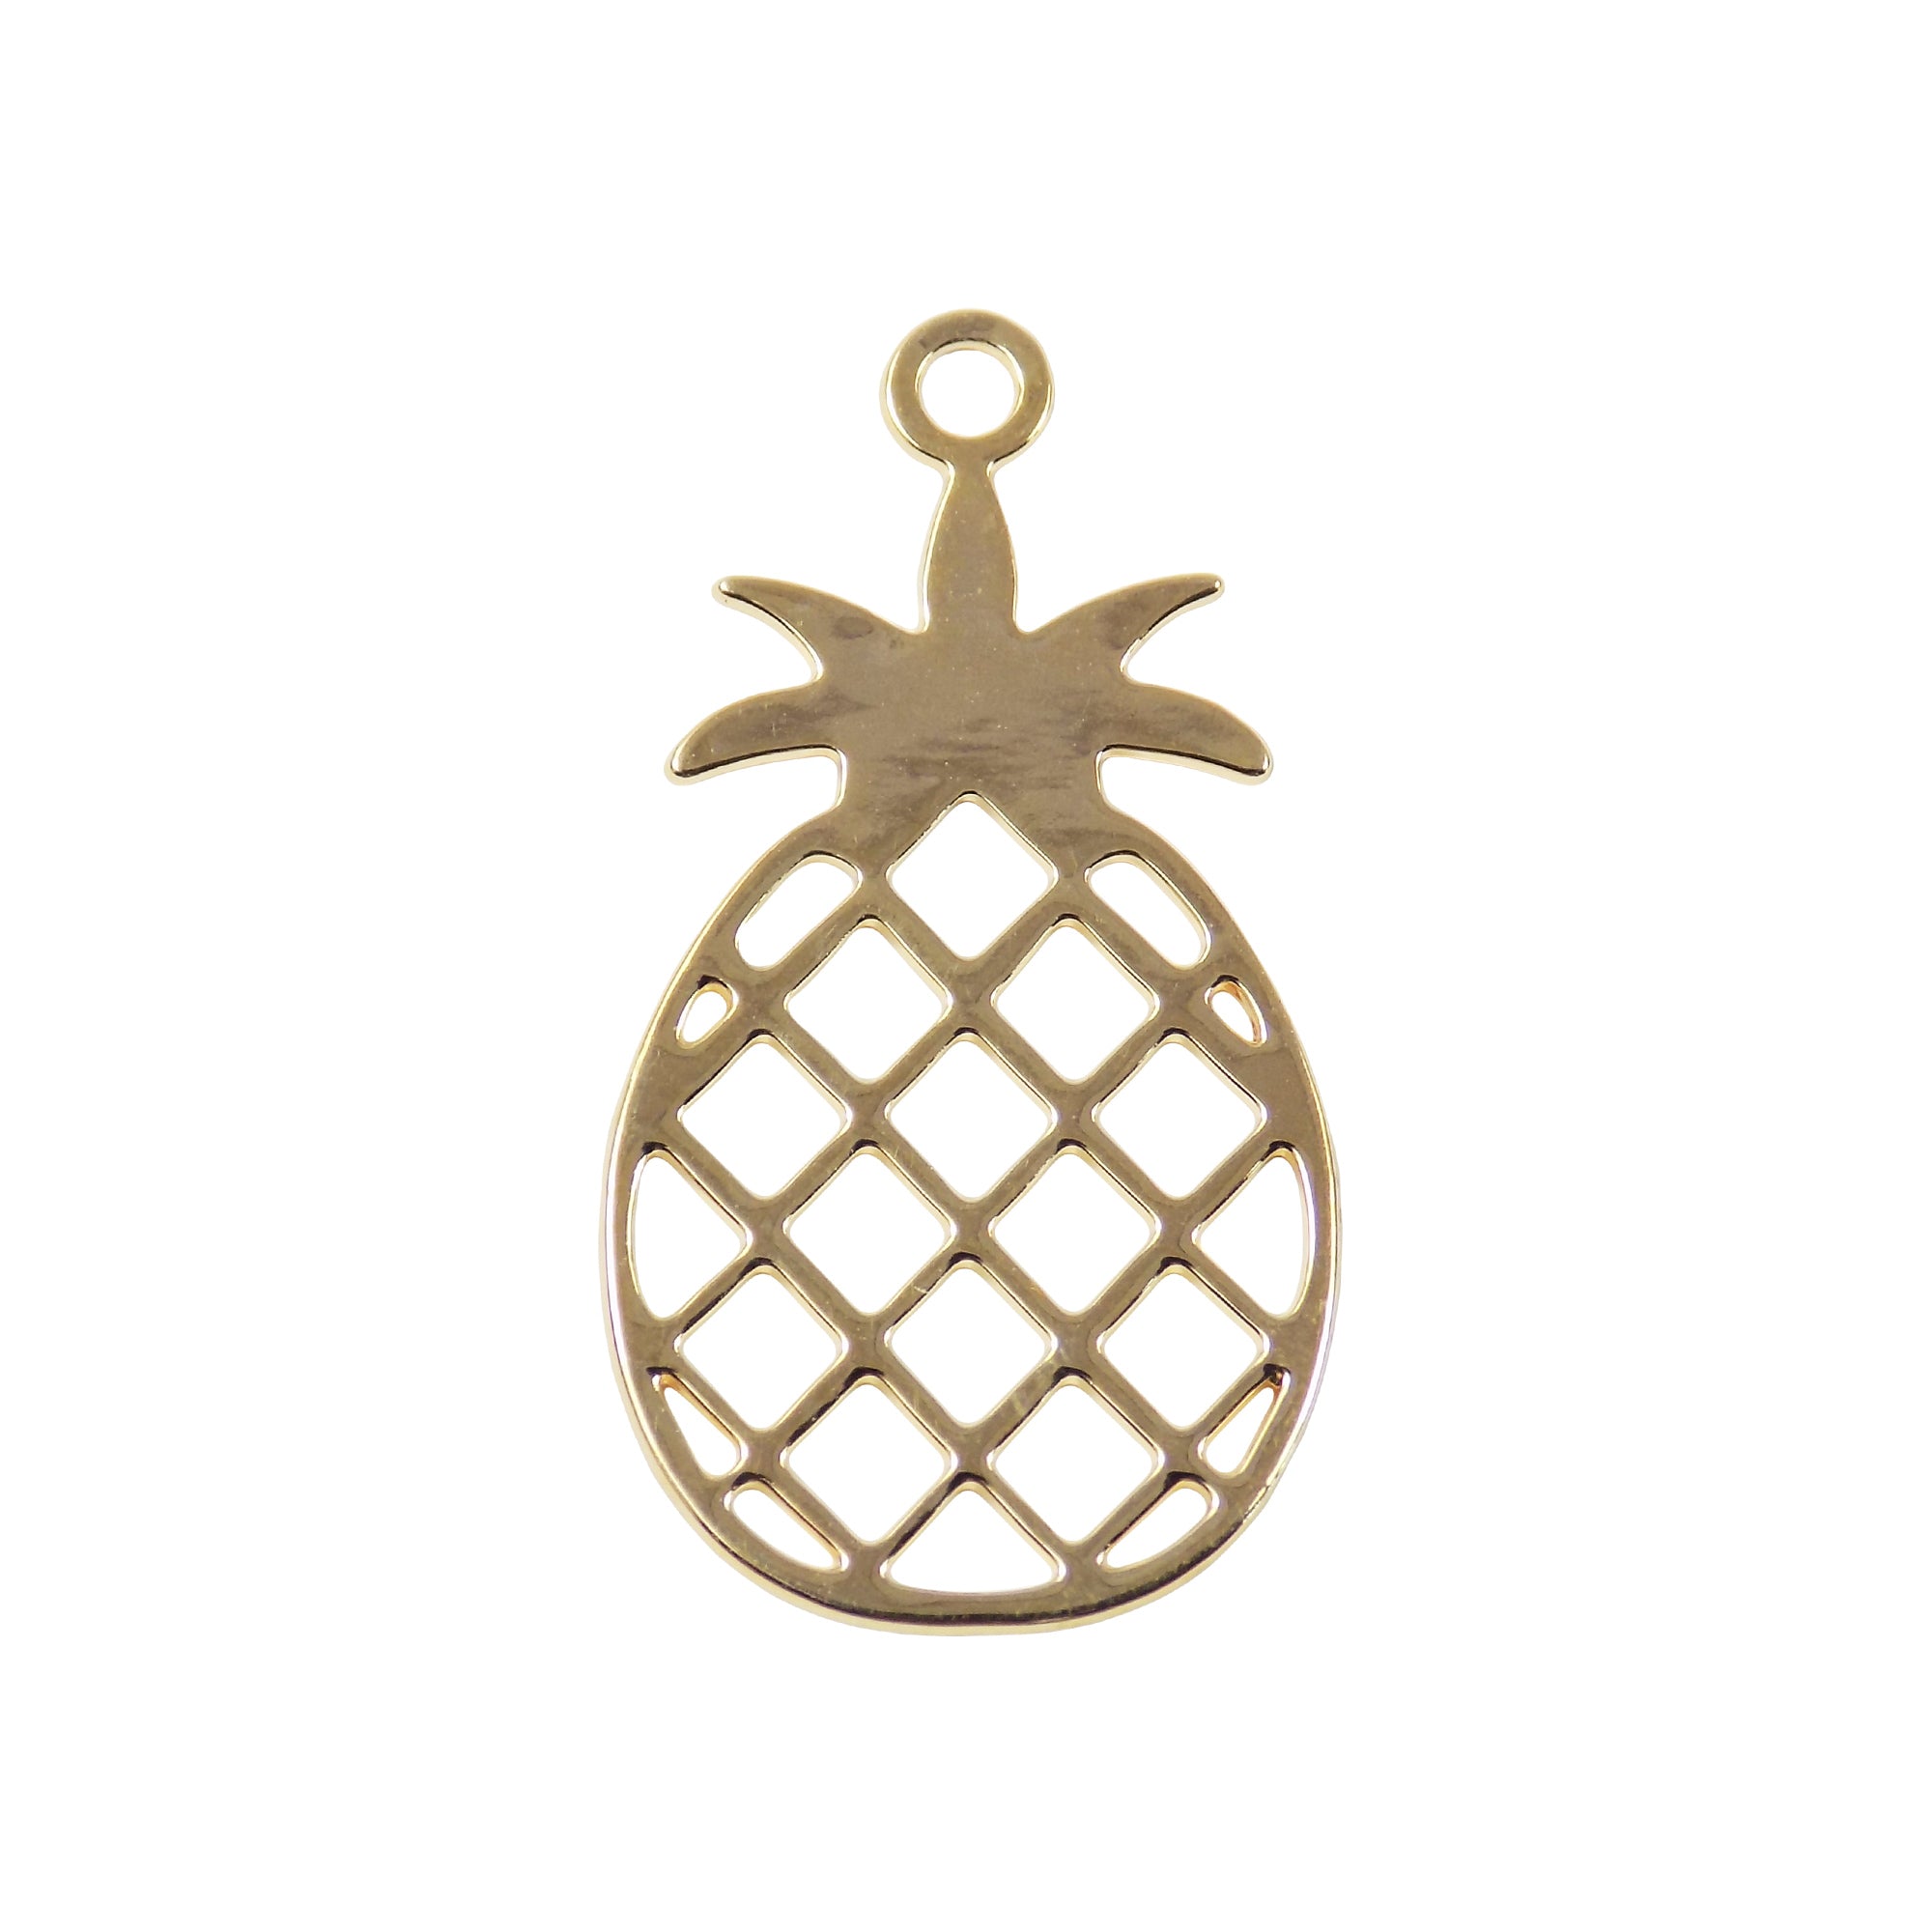 Gold-filled pineapple pendant